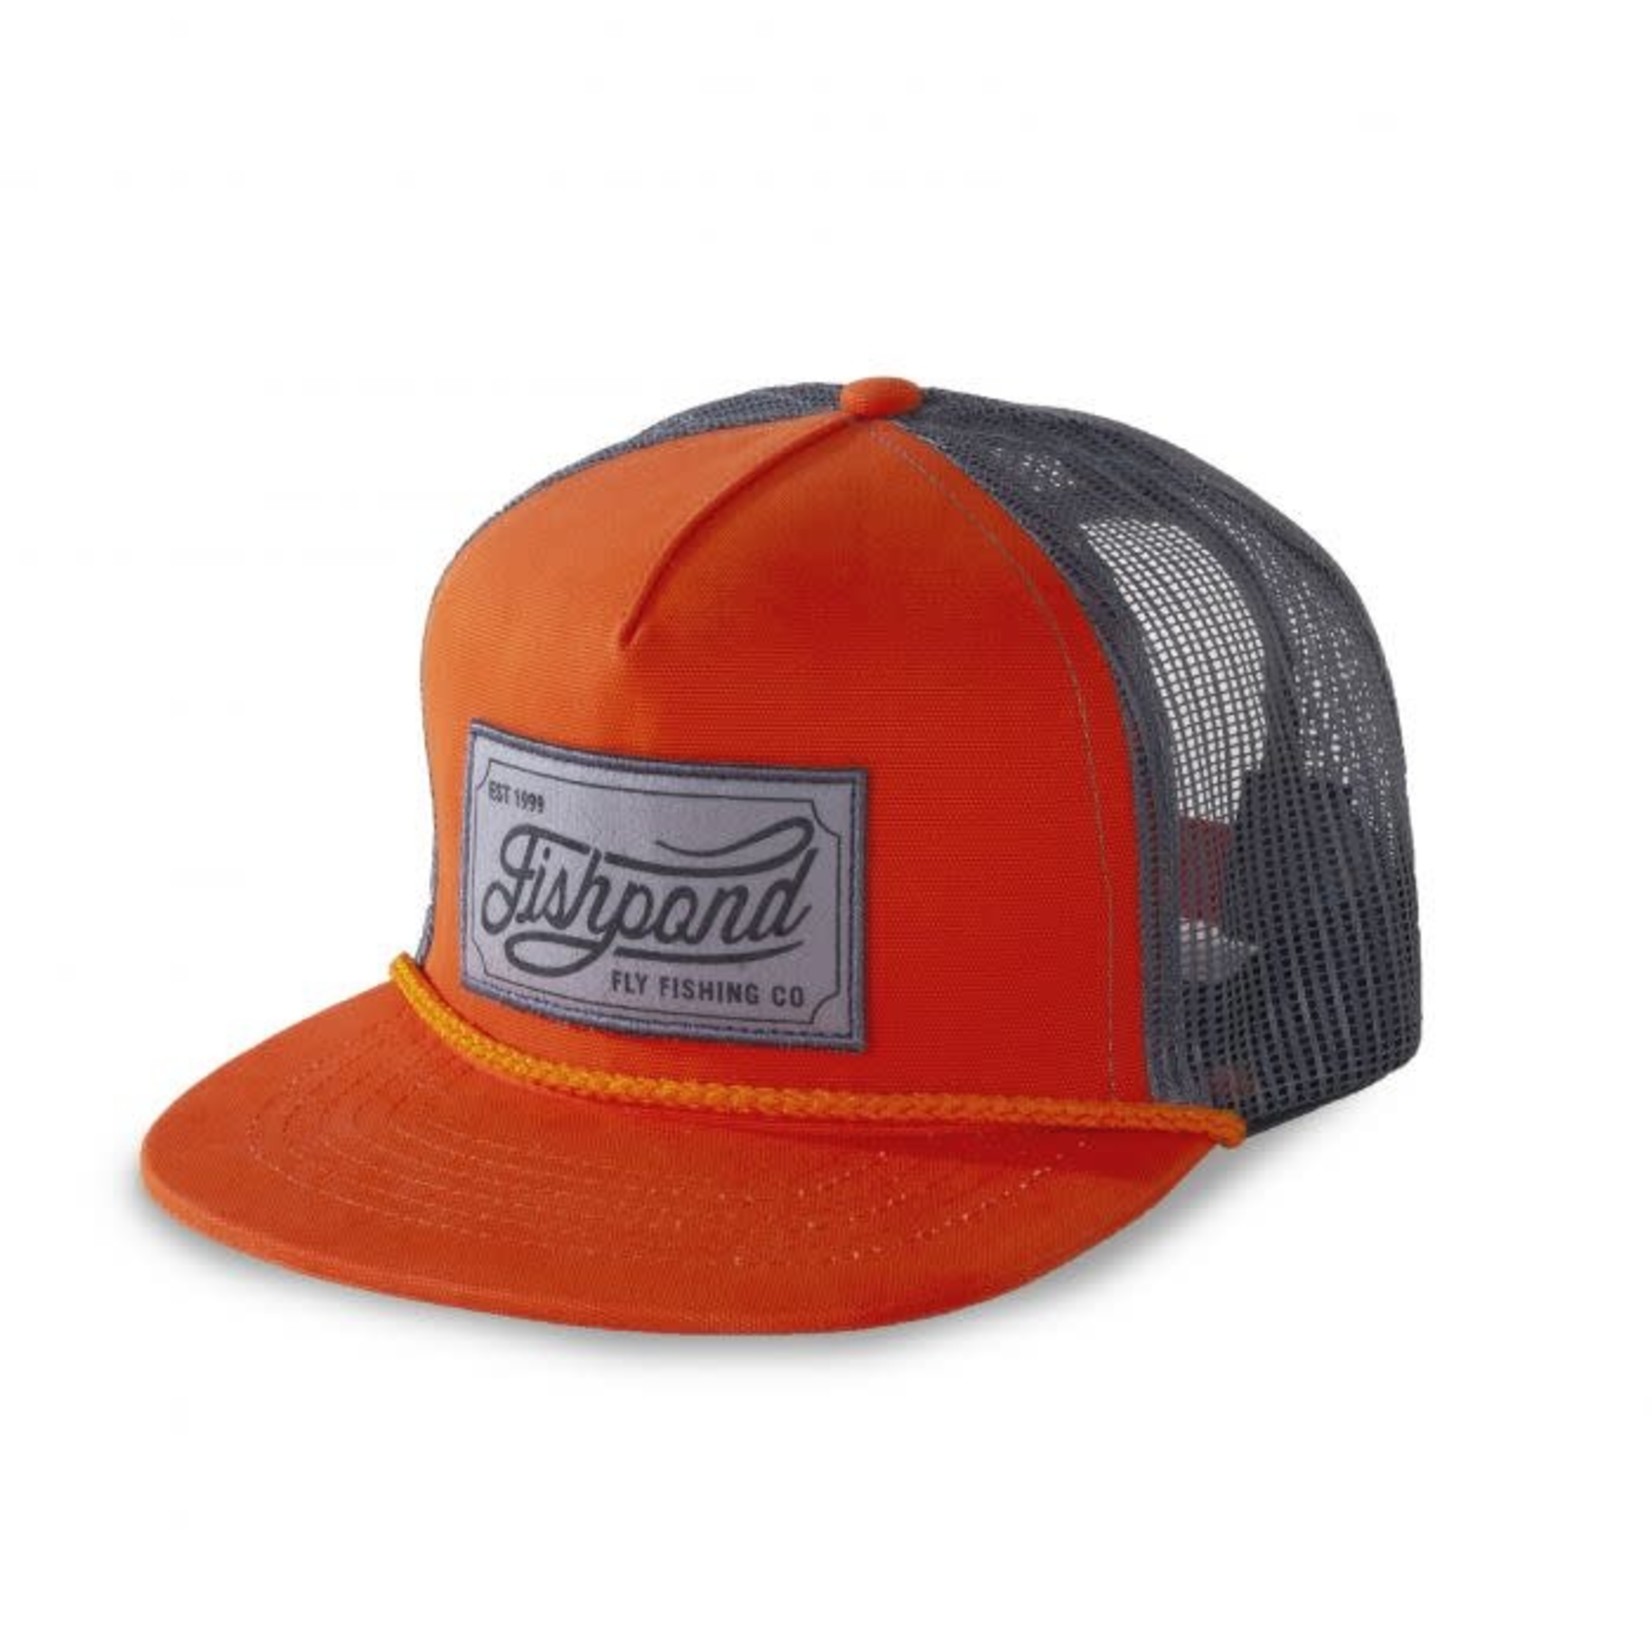 FISHPOND Heritage Trucker Hat Orange Charcoal